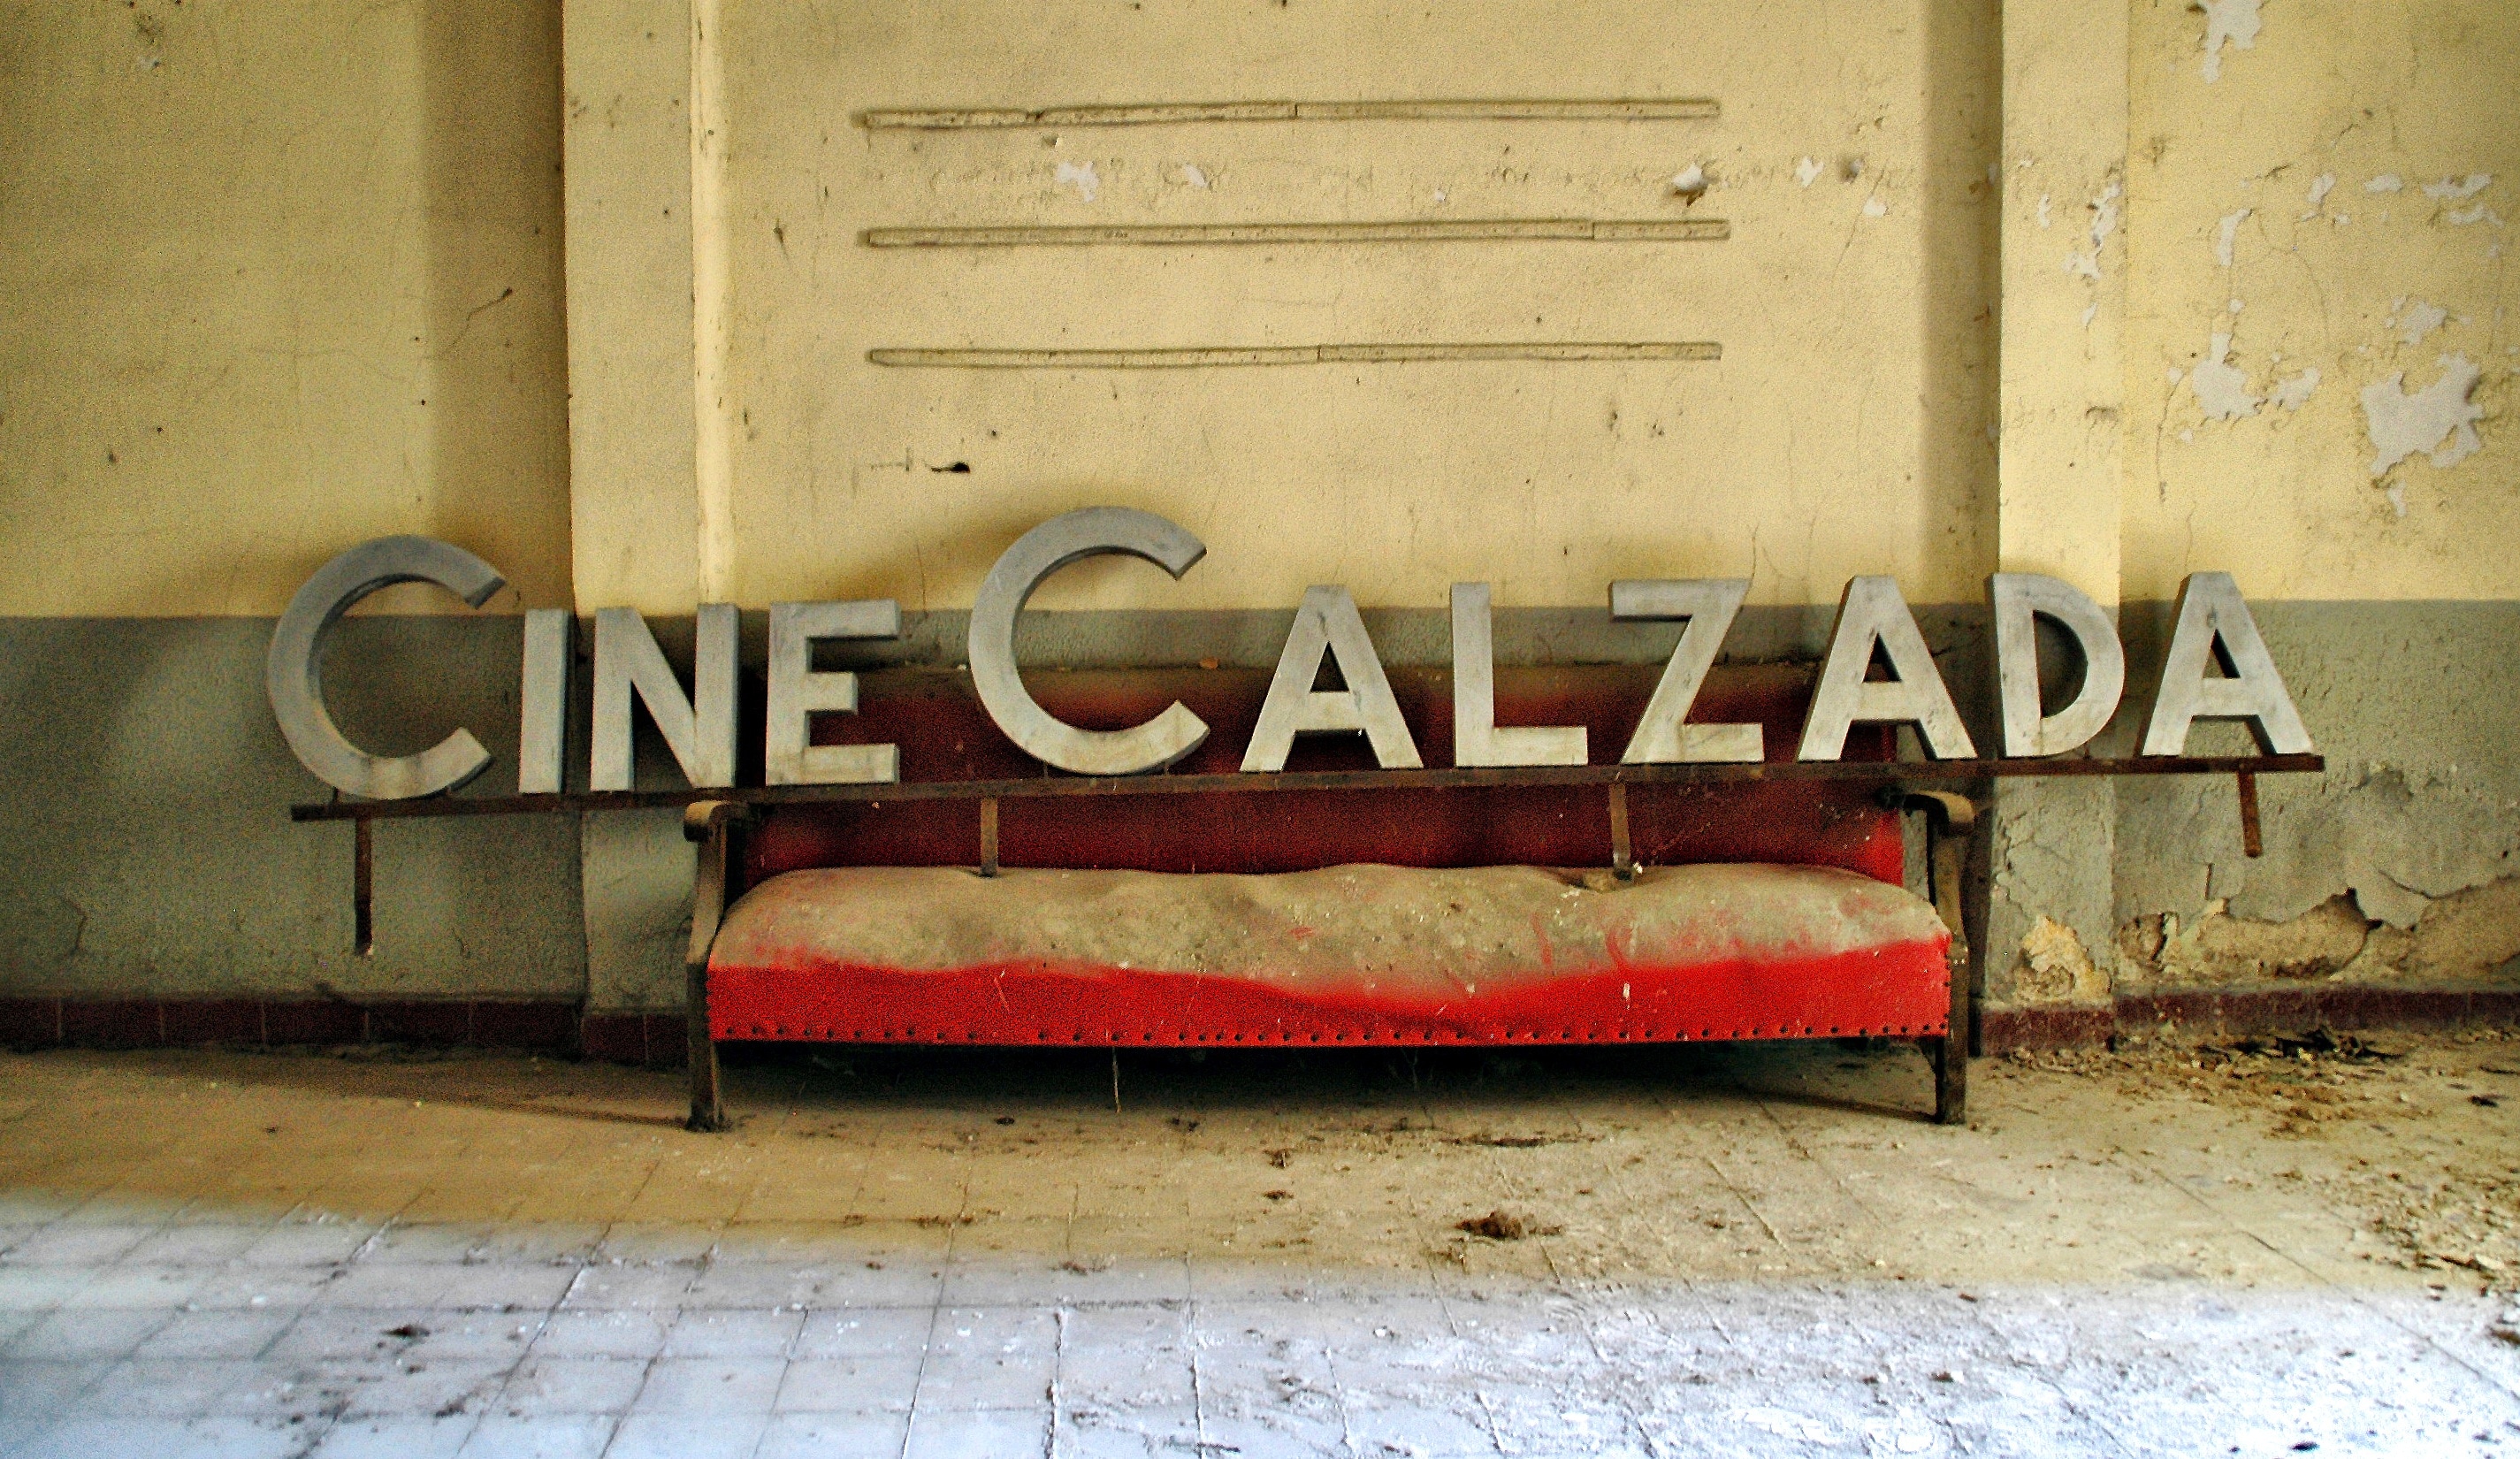 cine calzada cut out signage